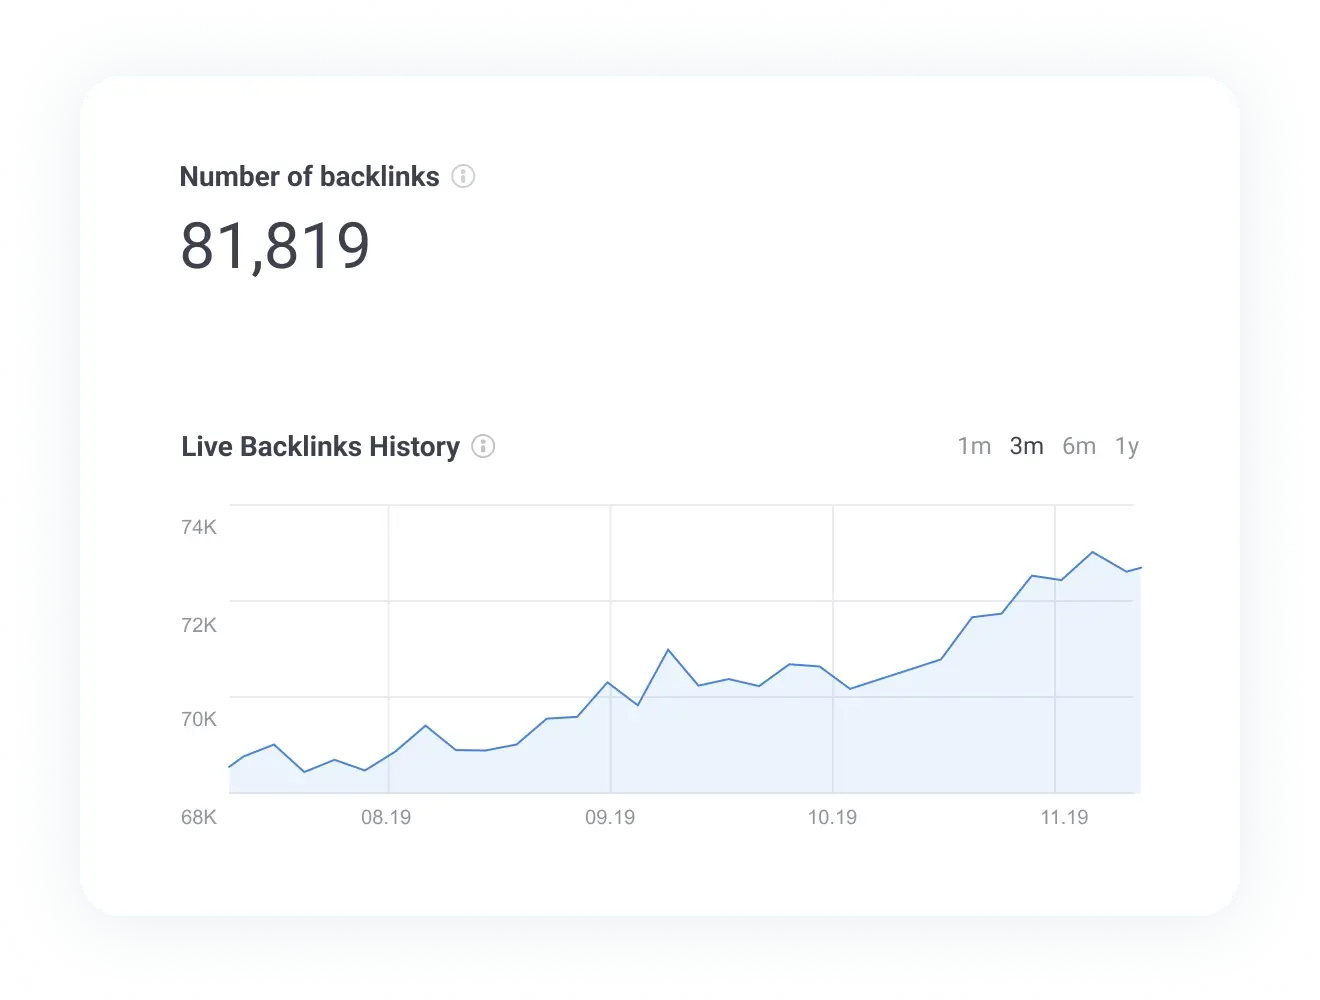 Veja o gráfico do histórico de backlinks ao vivo